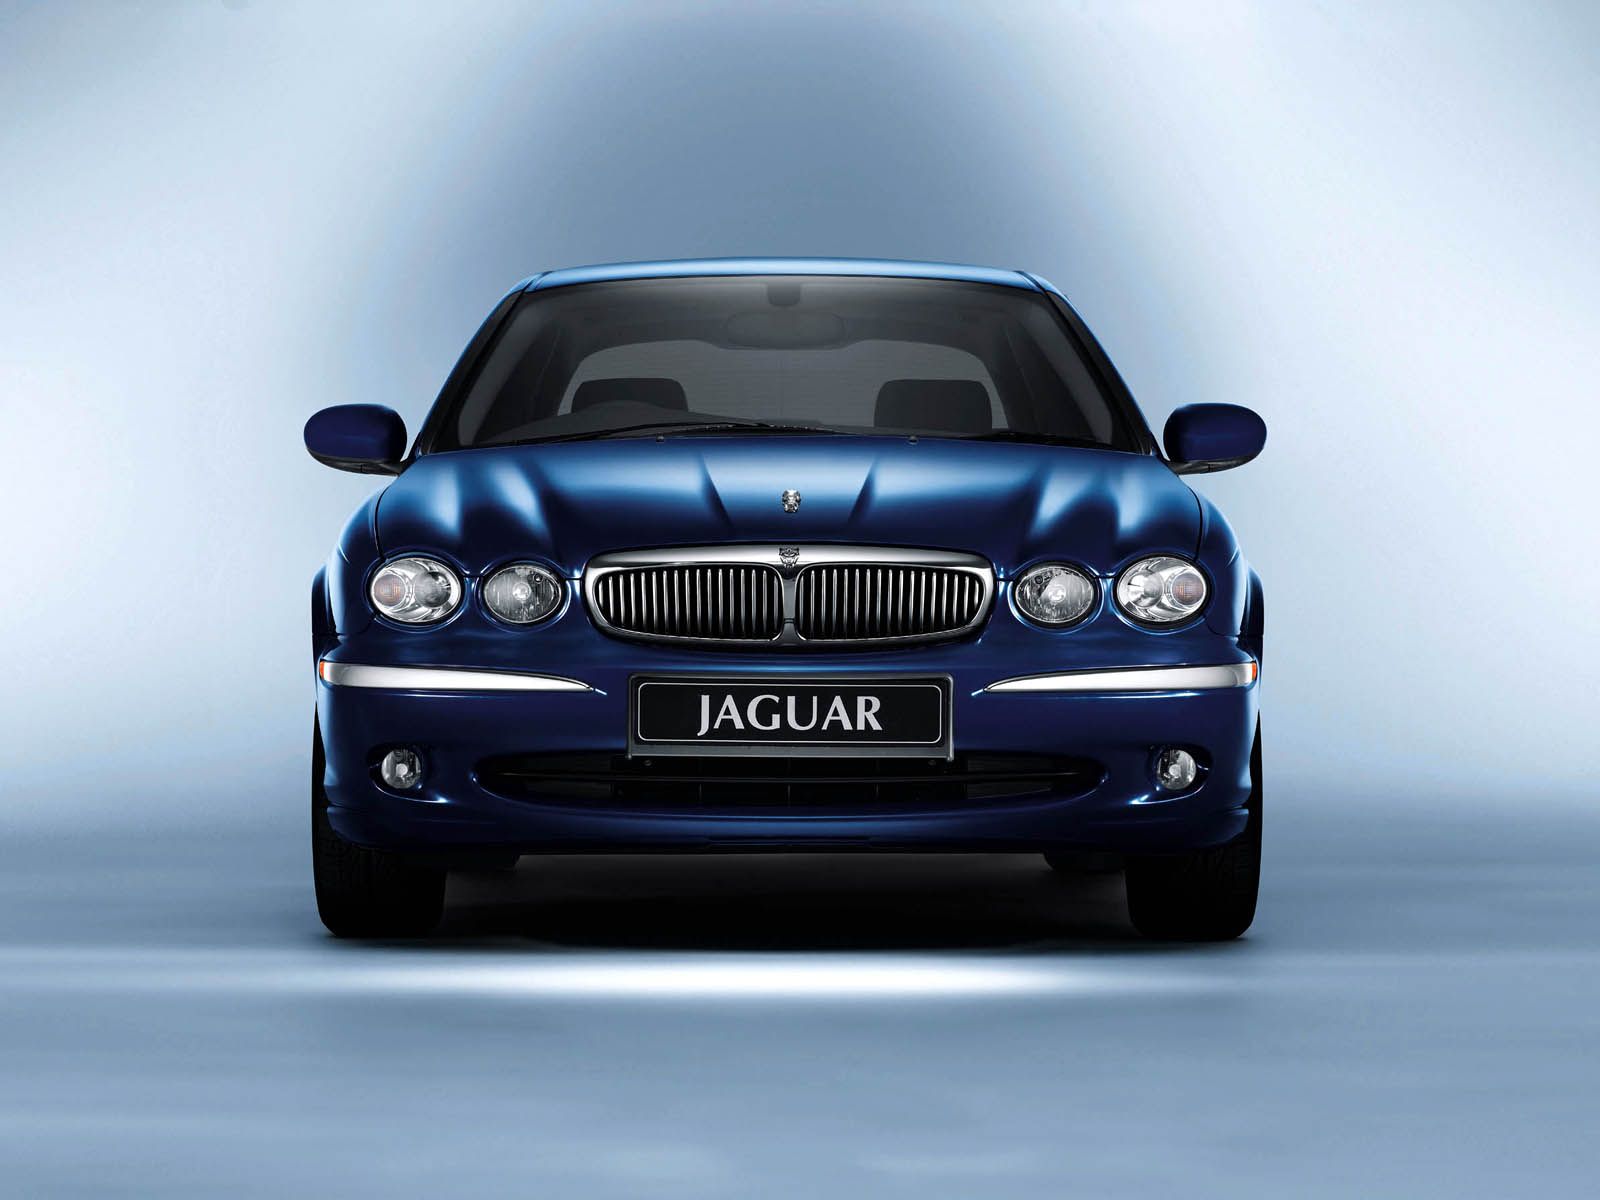 200 Amazing Jaguar Cars Wallpapers 1600 X 1200 - 177.jpg